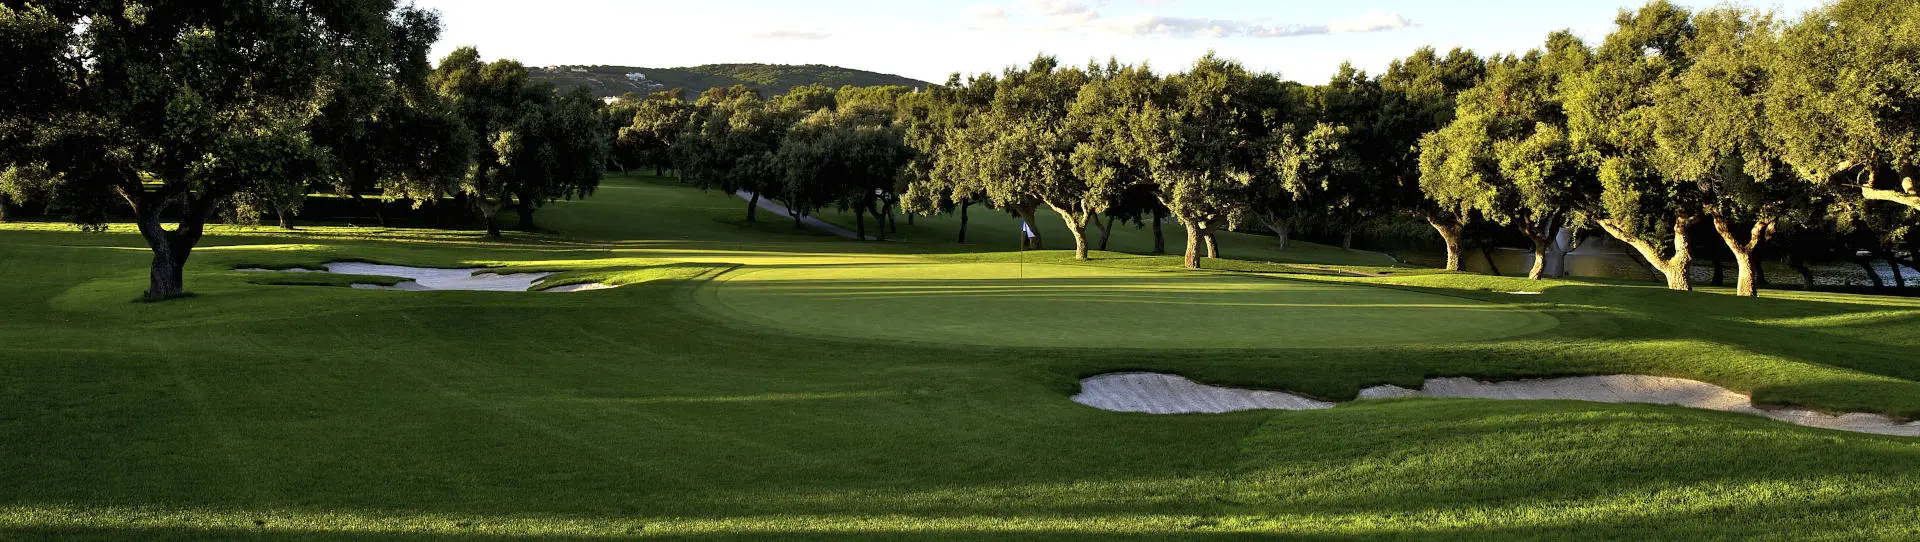 Spain golf holidays - Spain Finest Golf Pack 1 - Photo 3